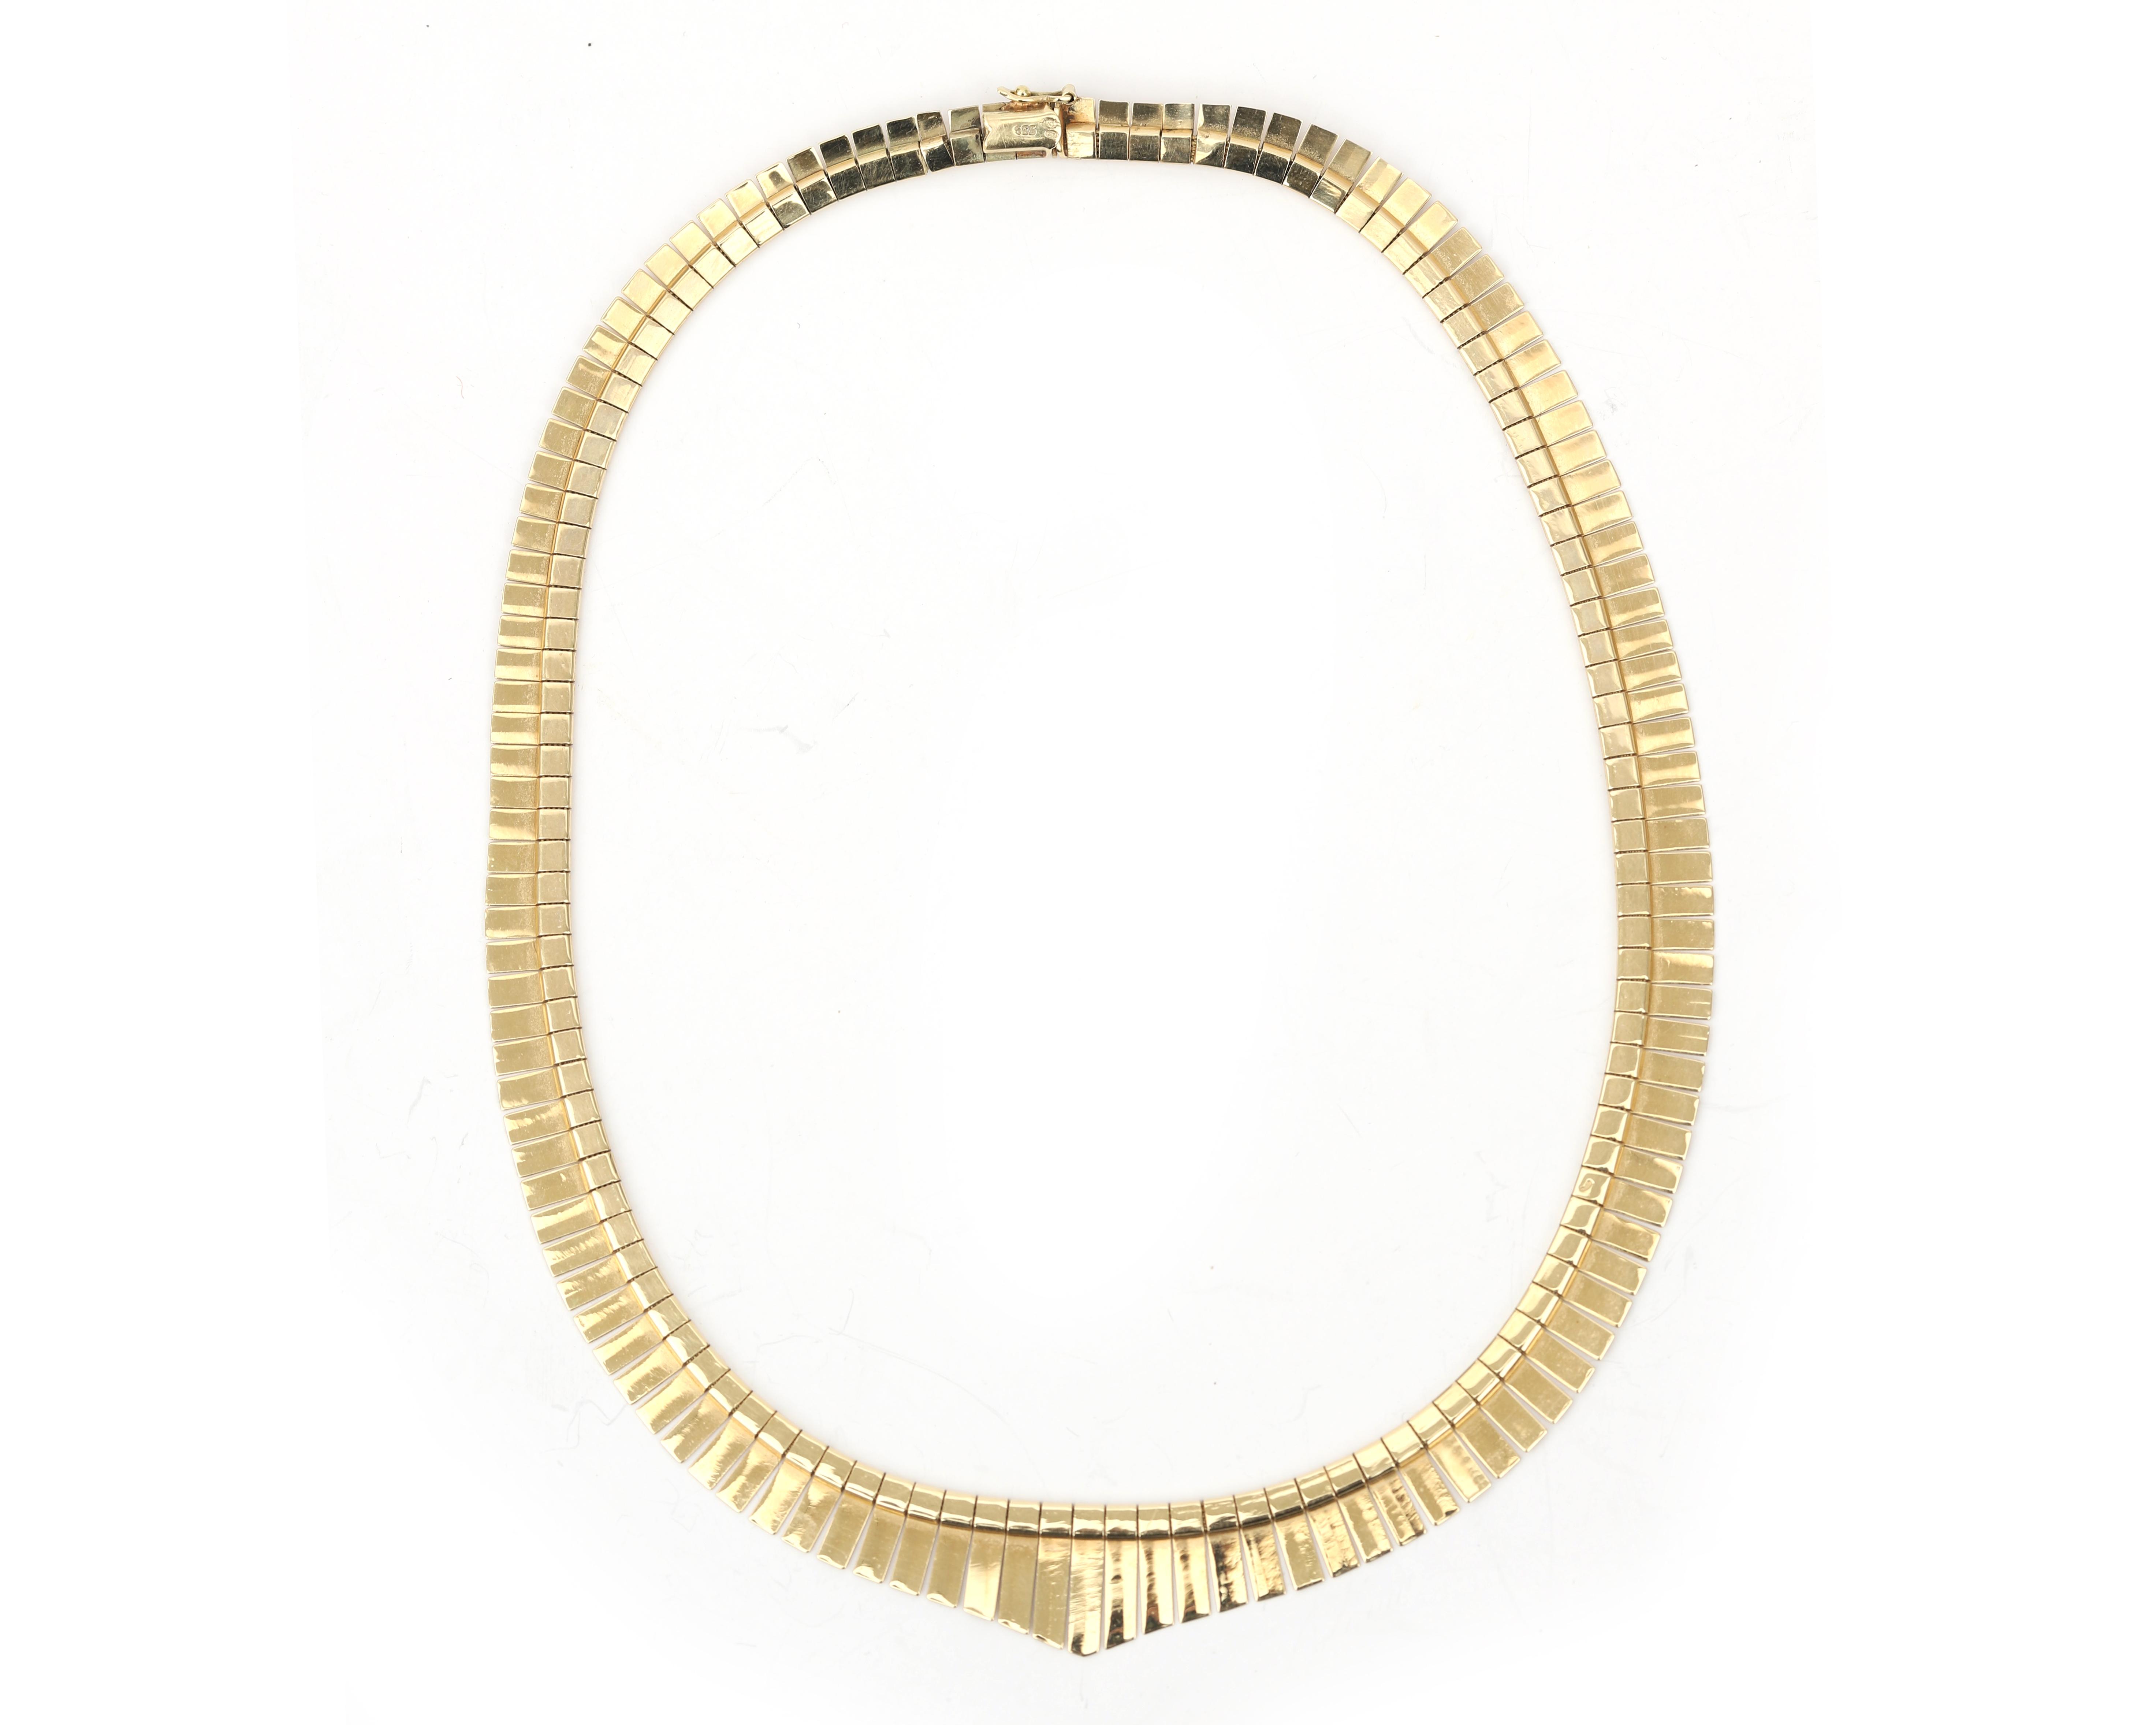 A 14 karat gold lamella necklace - Image 2 of 4